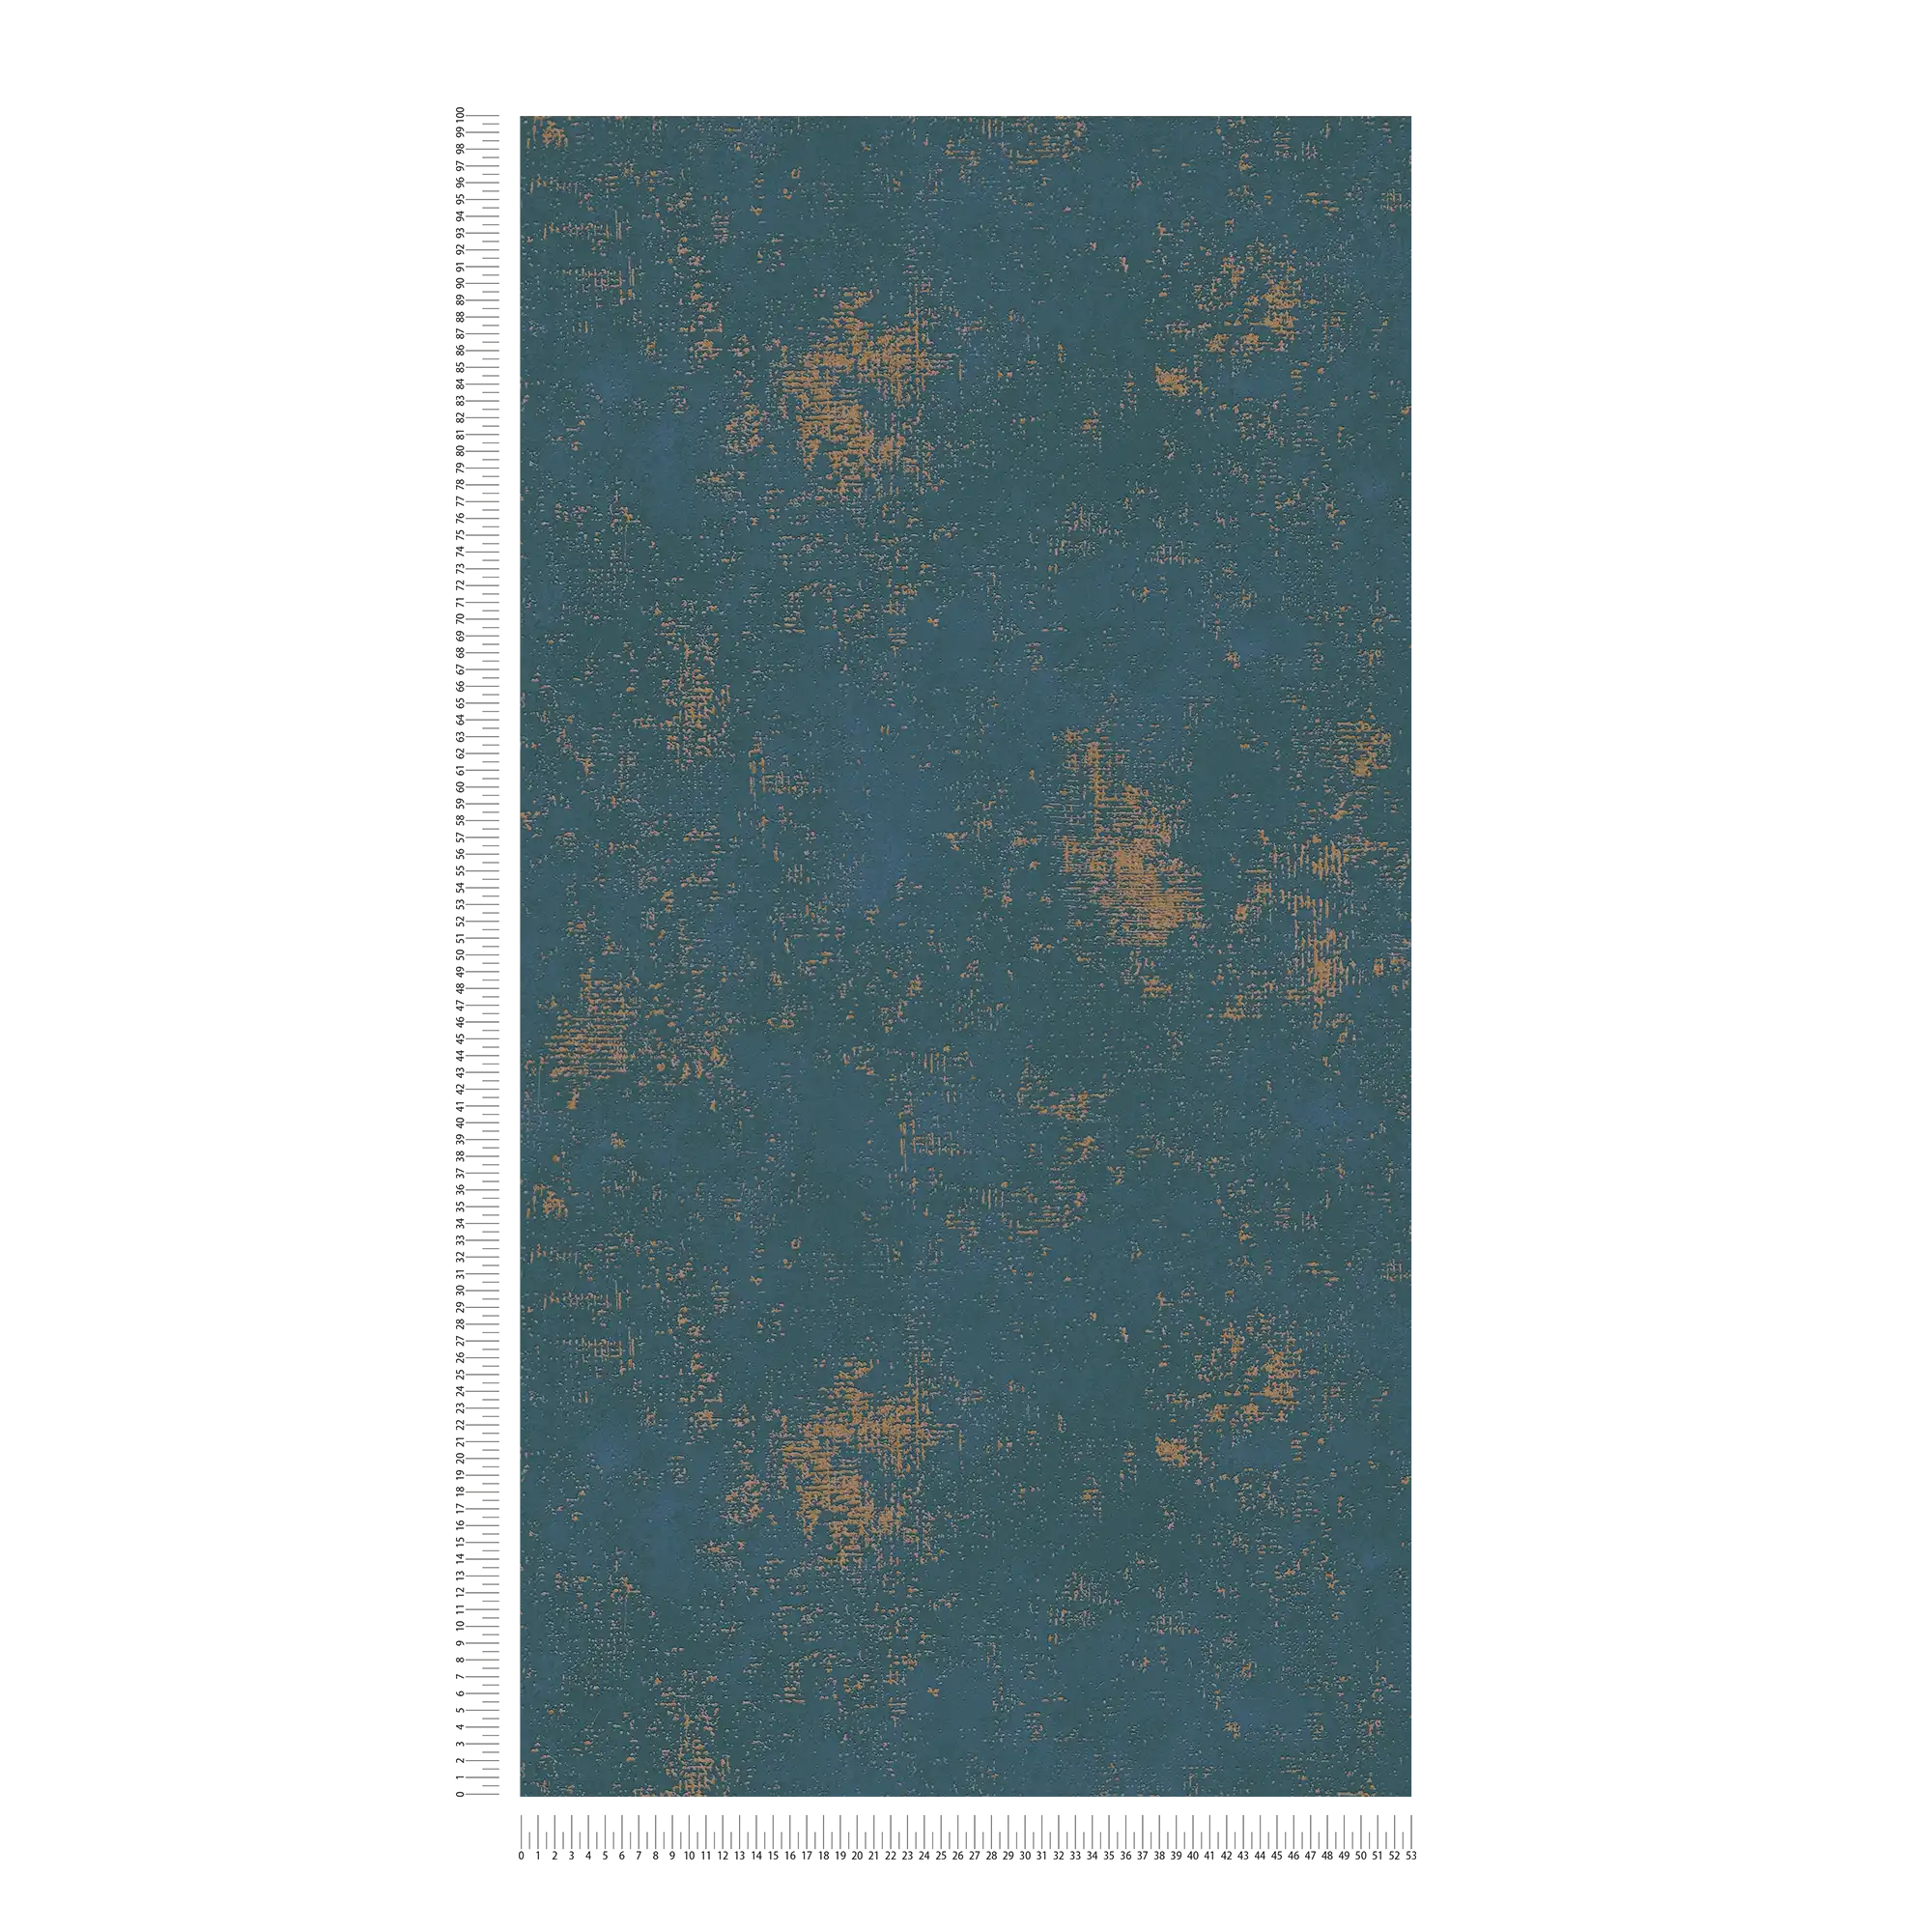             Carta da parati blu con accenti metallici dorati e dettagli di texture
        